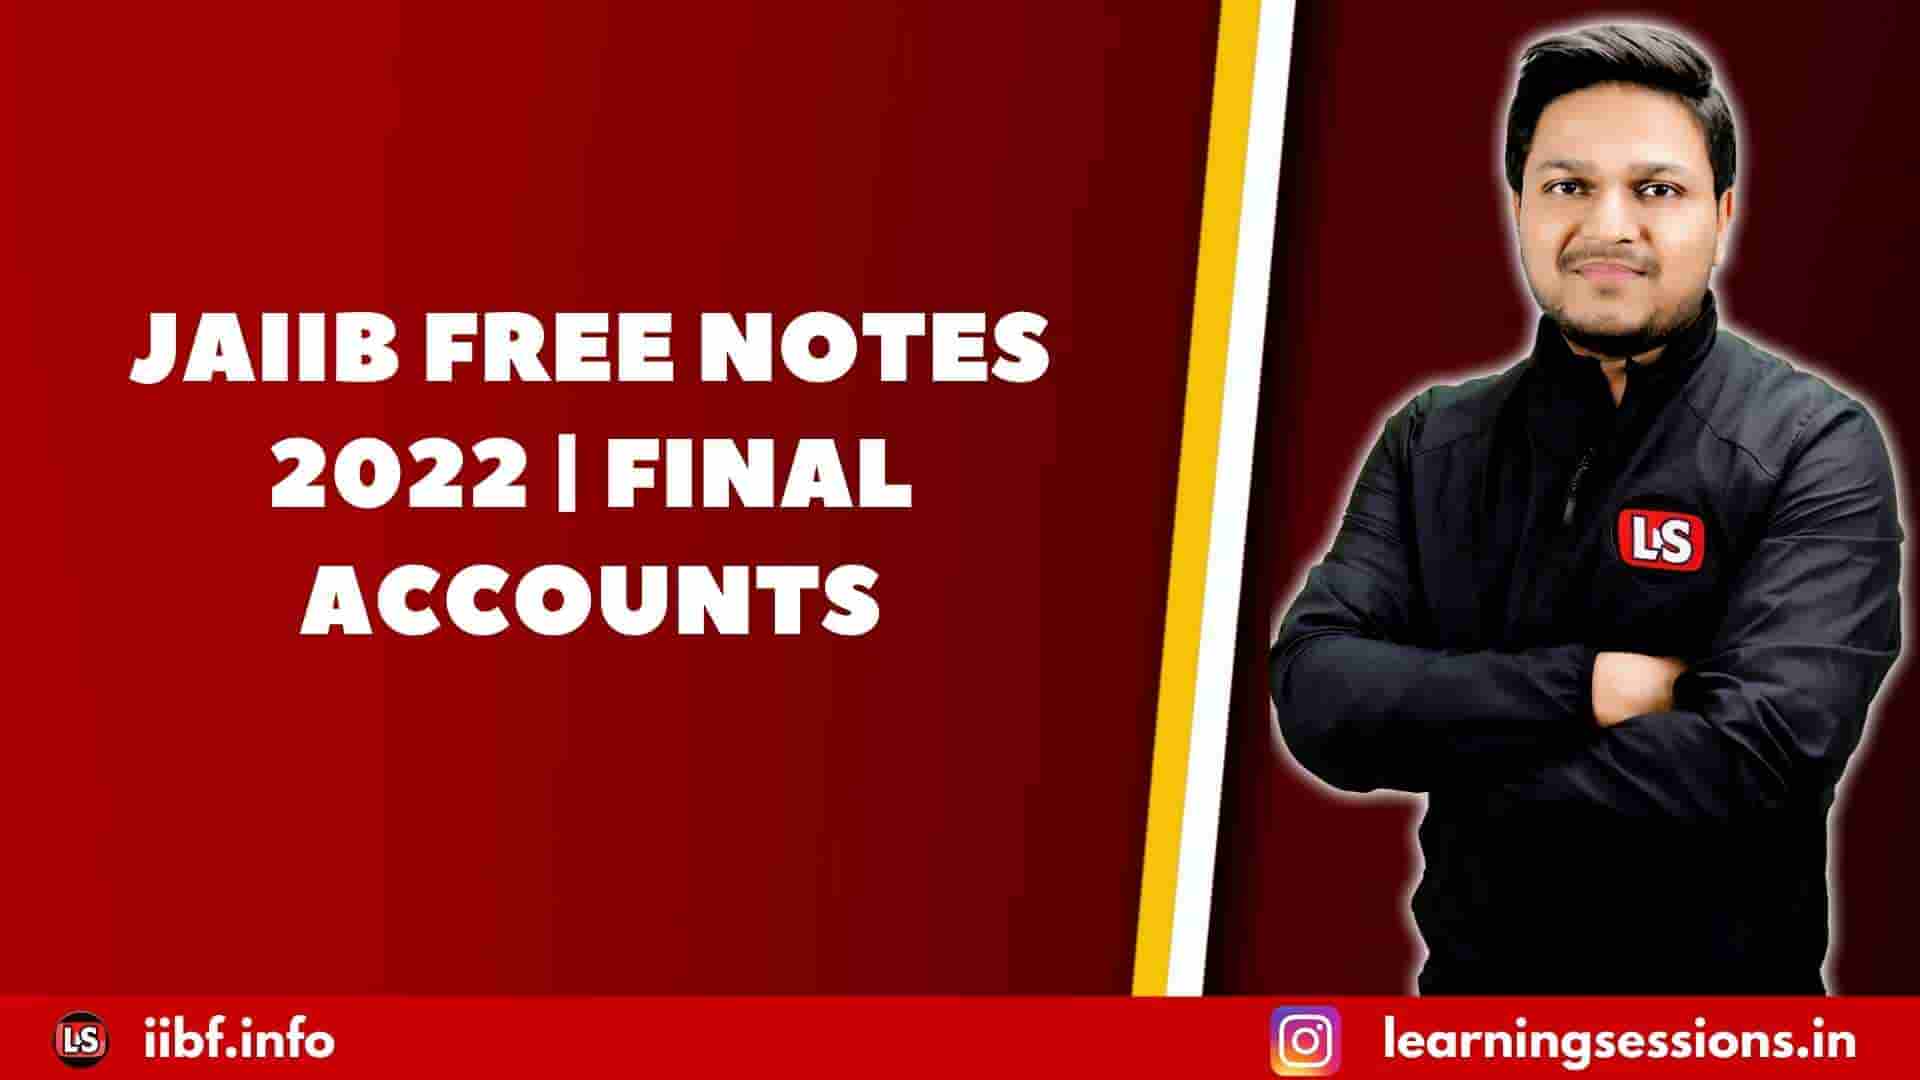 JAIIB FREE NOTES 2022 | FINAL ACCOUNTS